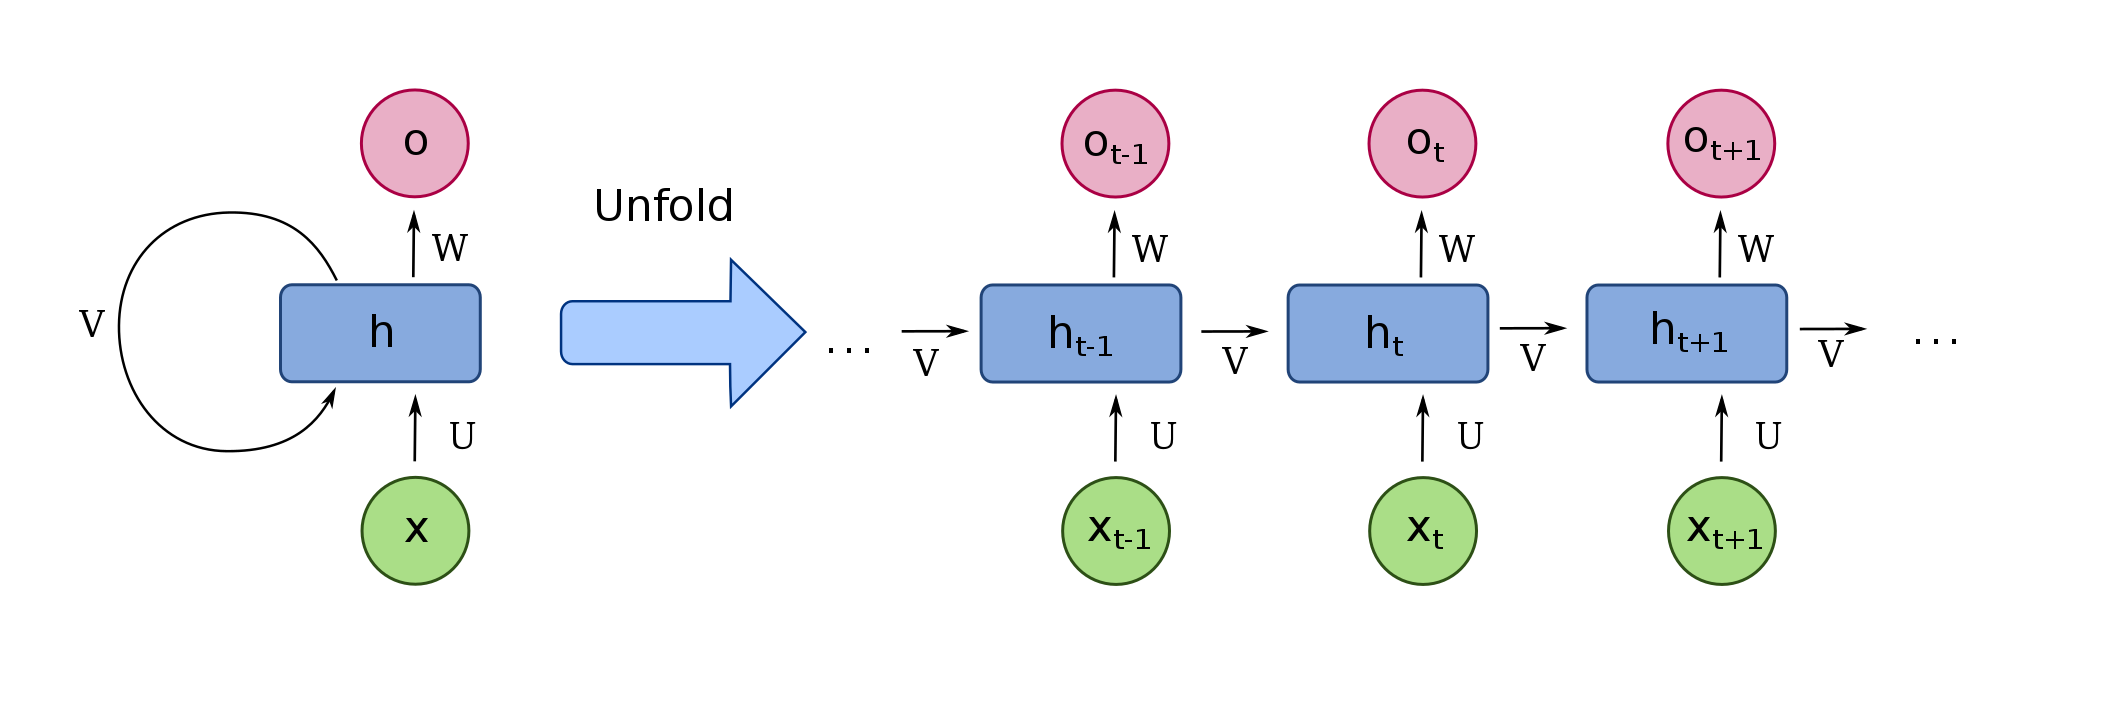 Figure 1: RNN Architecture. Source: [2]